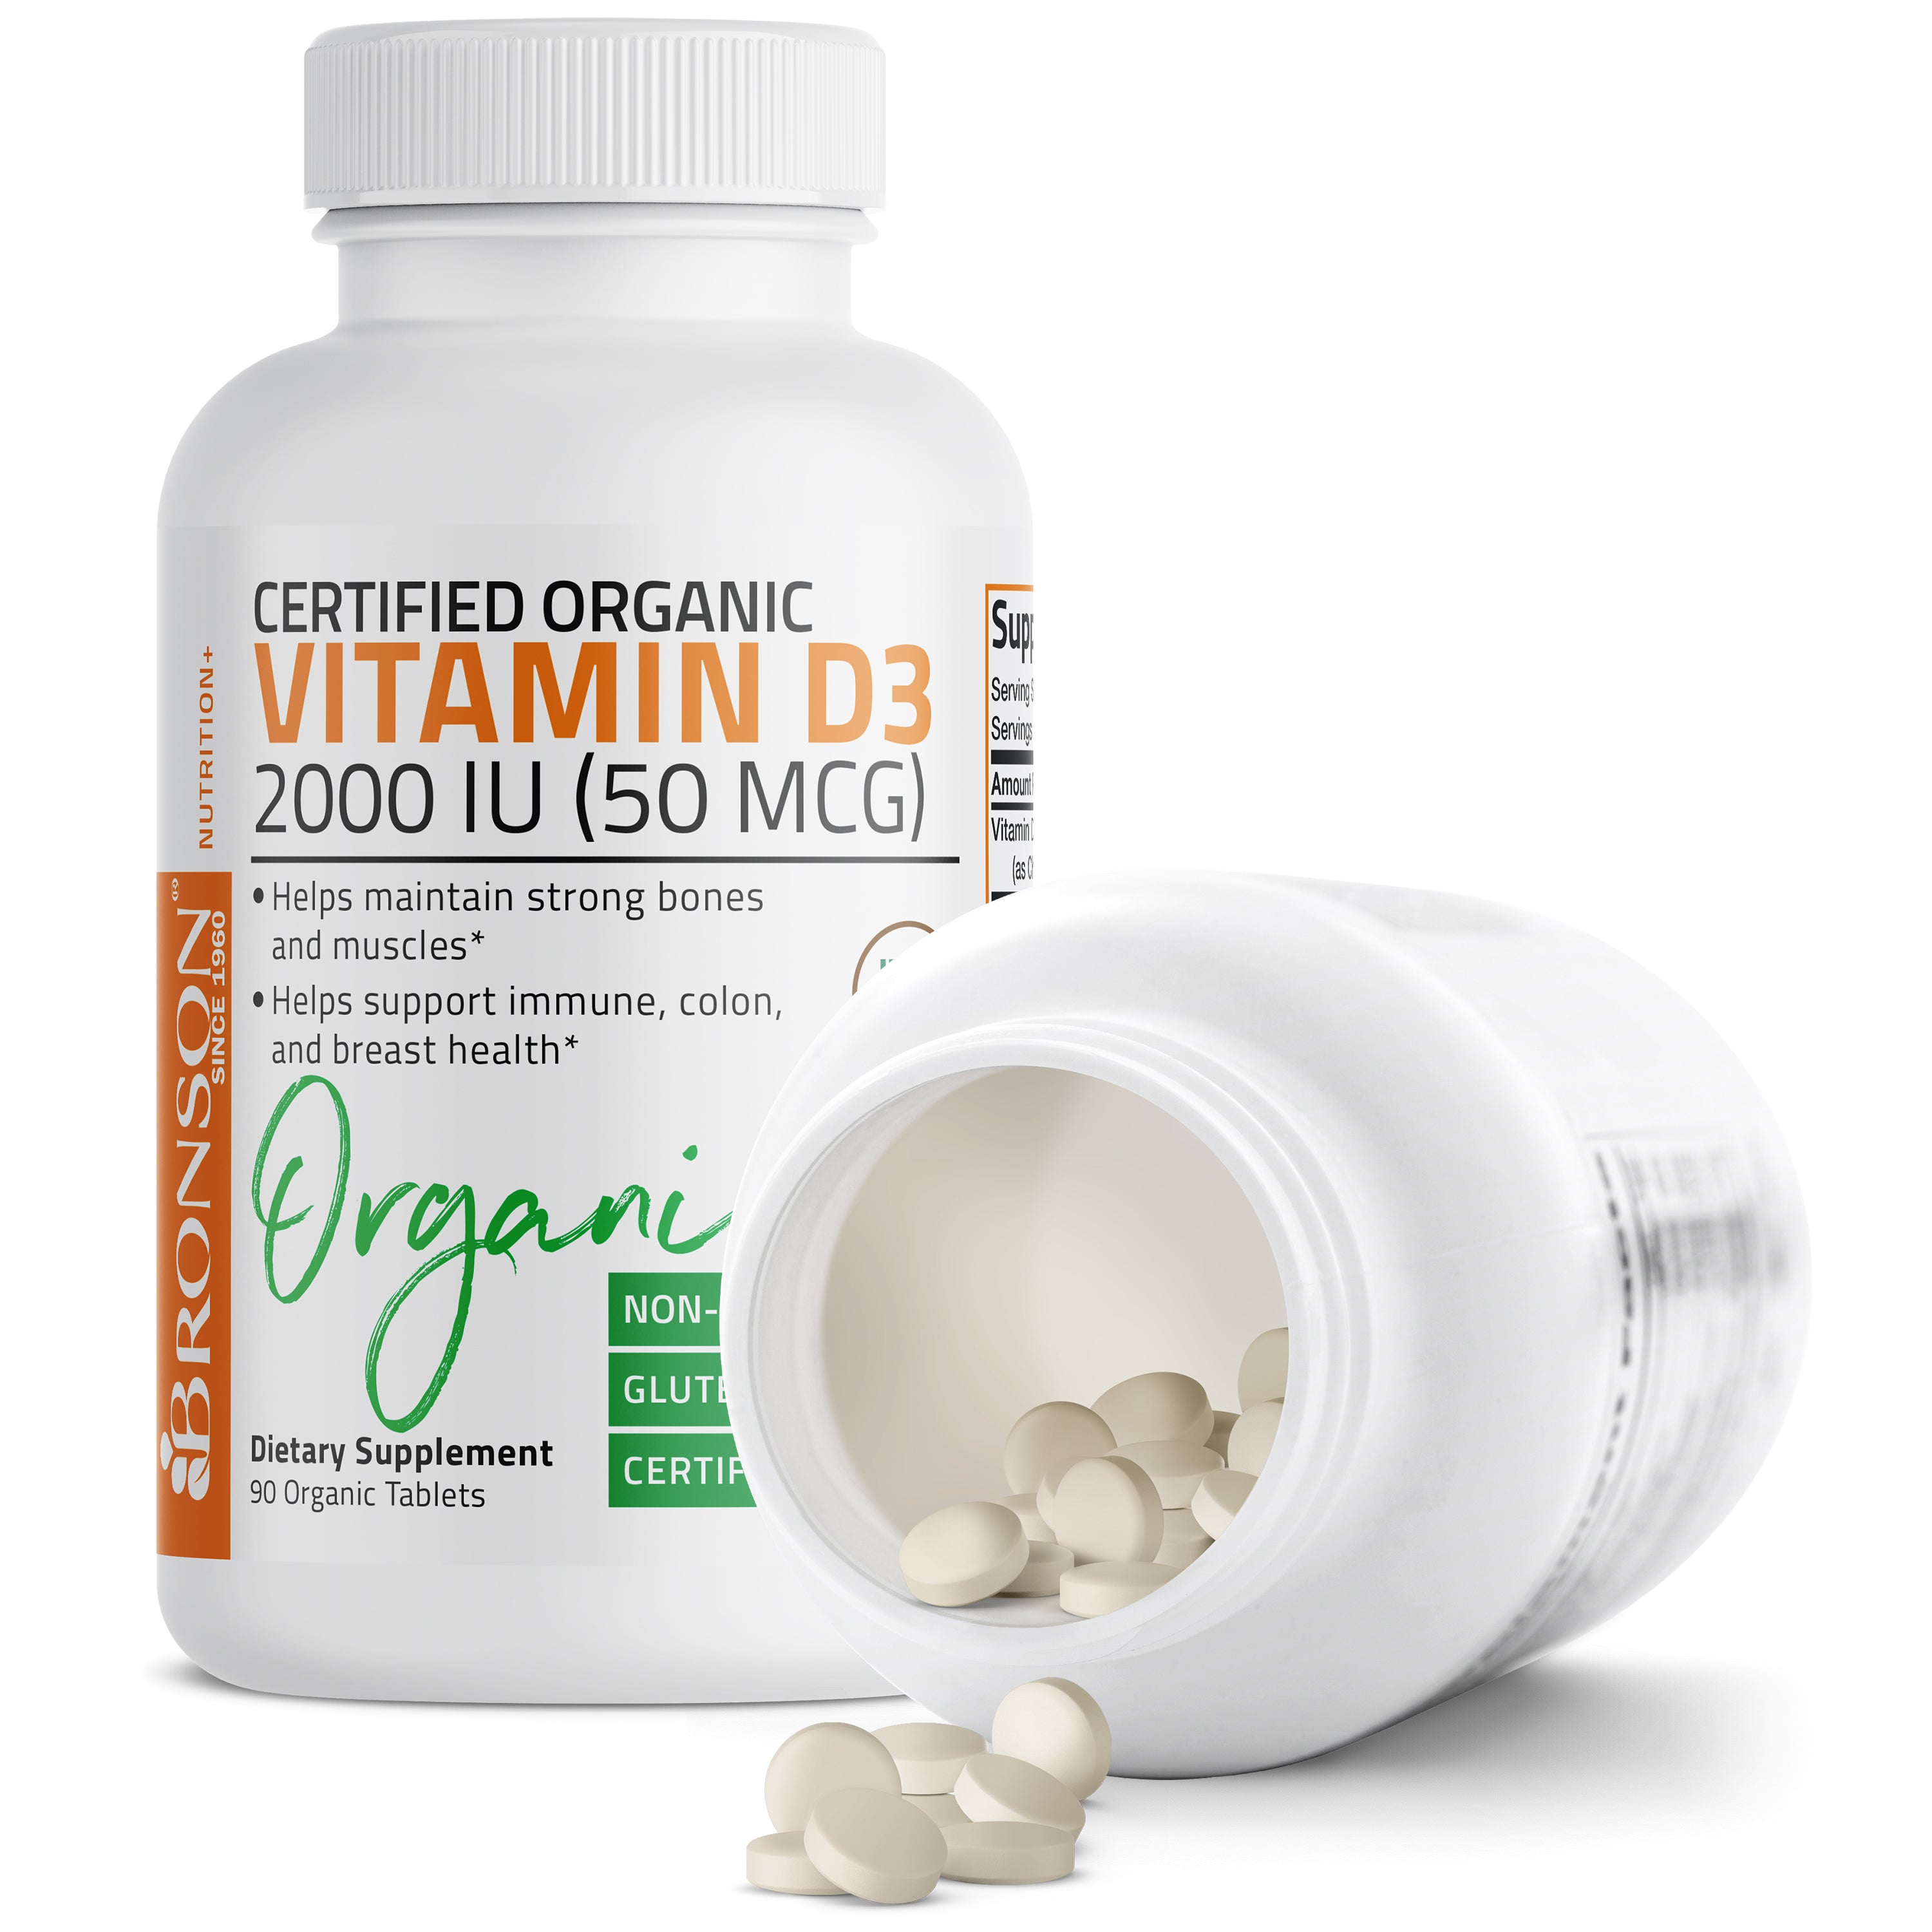 Vitamin D3 USDA Certified Organic - 2,000 IU view 3 of 5